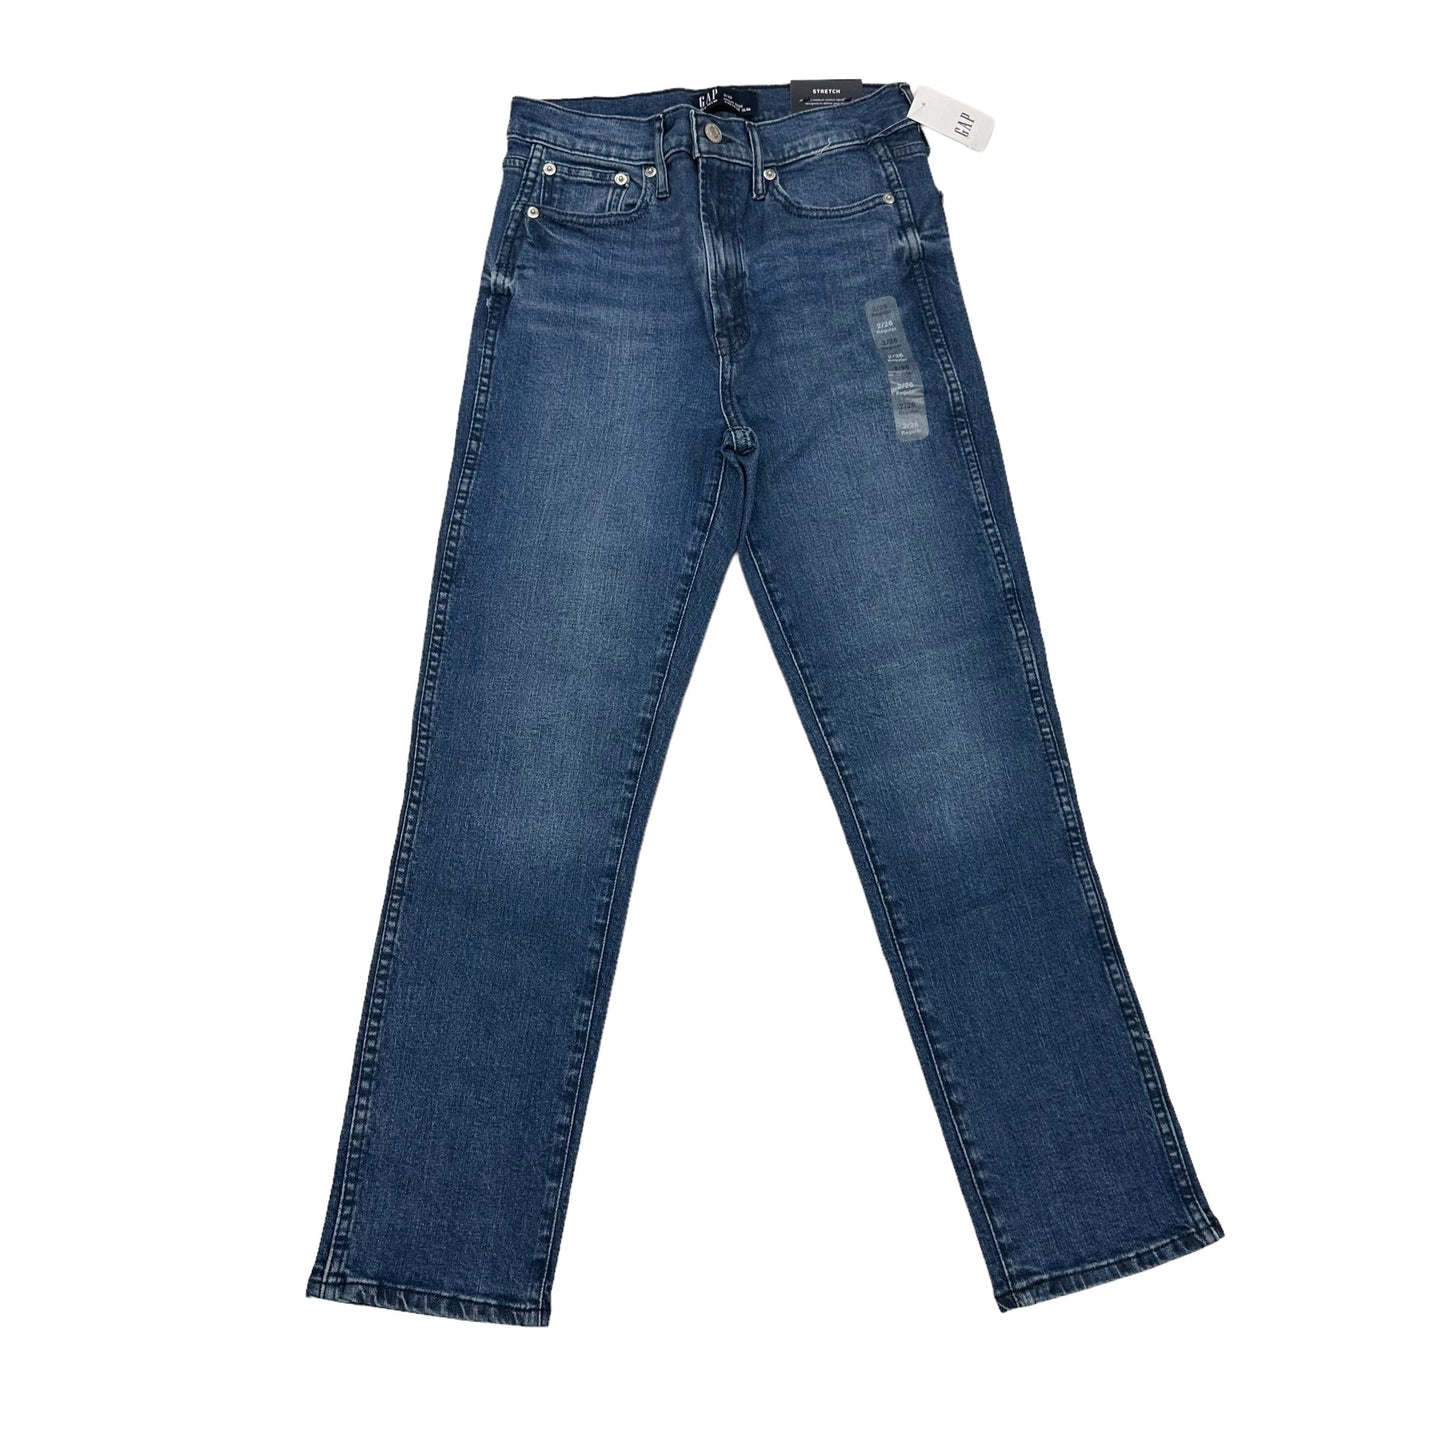 Jeans Skinny By Gap  Size: 2